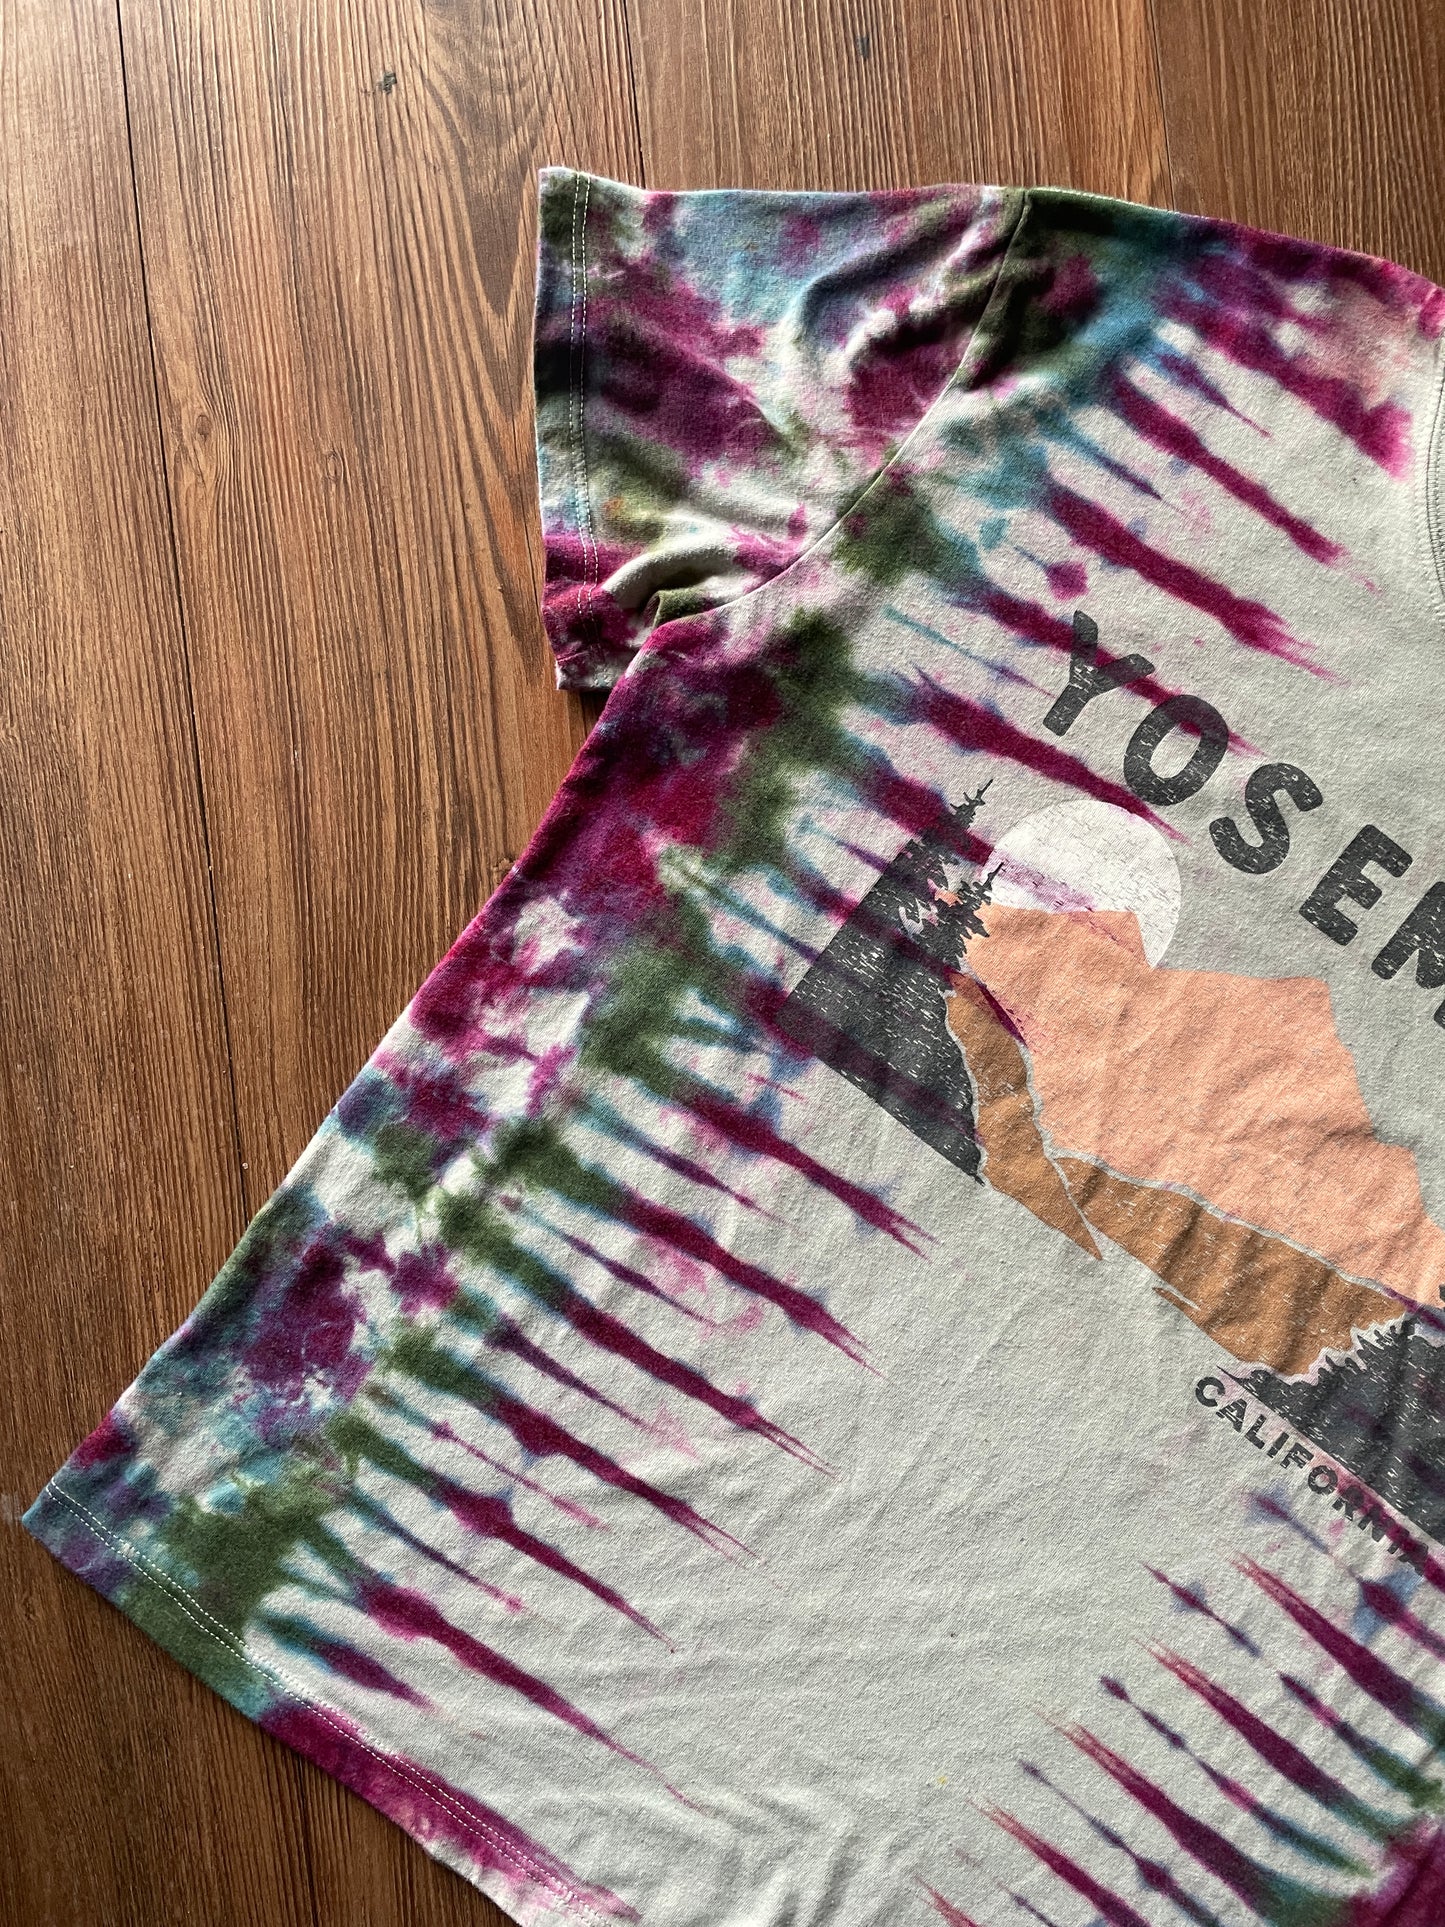 XL Women’s Yosemite California Mountains Tie Dye T-Shirt | Pastel Green Earth Tones Short Sleeve